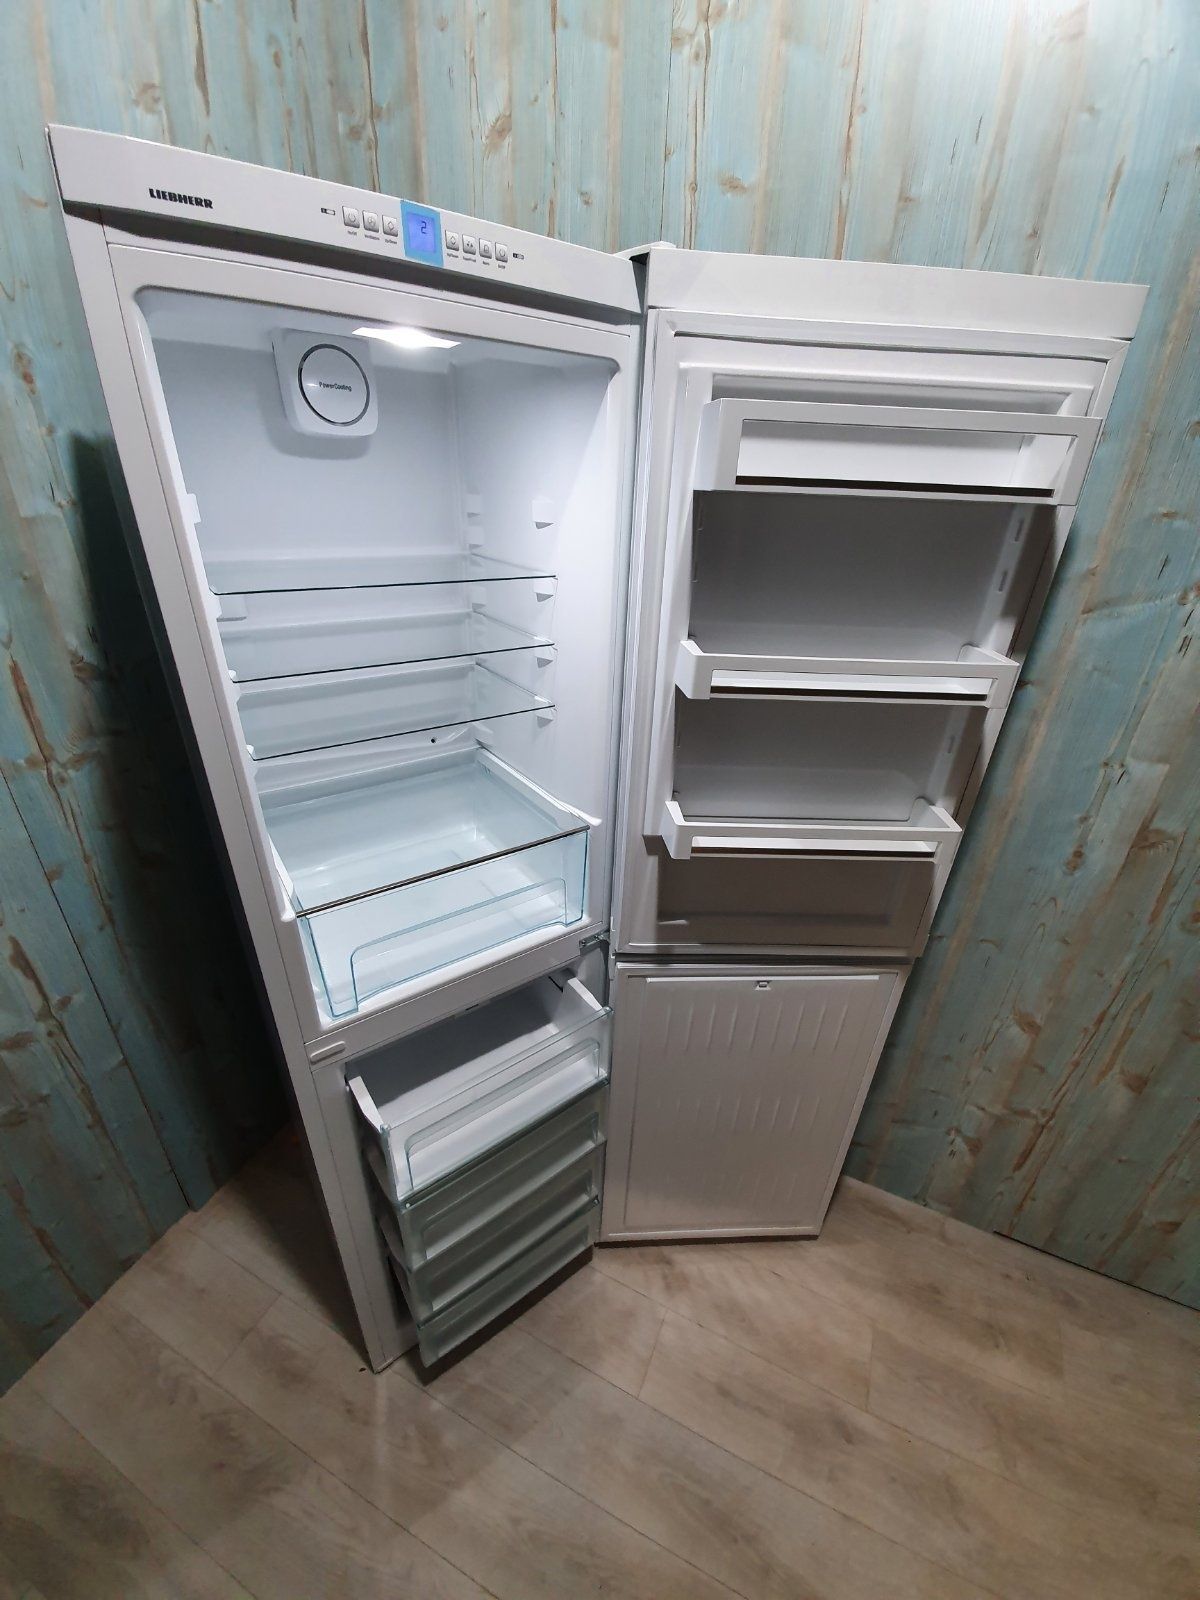 Холодильник Liebherr 2м, NoFrost, PowerCooling, Супер сост, гарантия